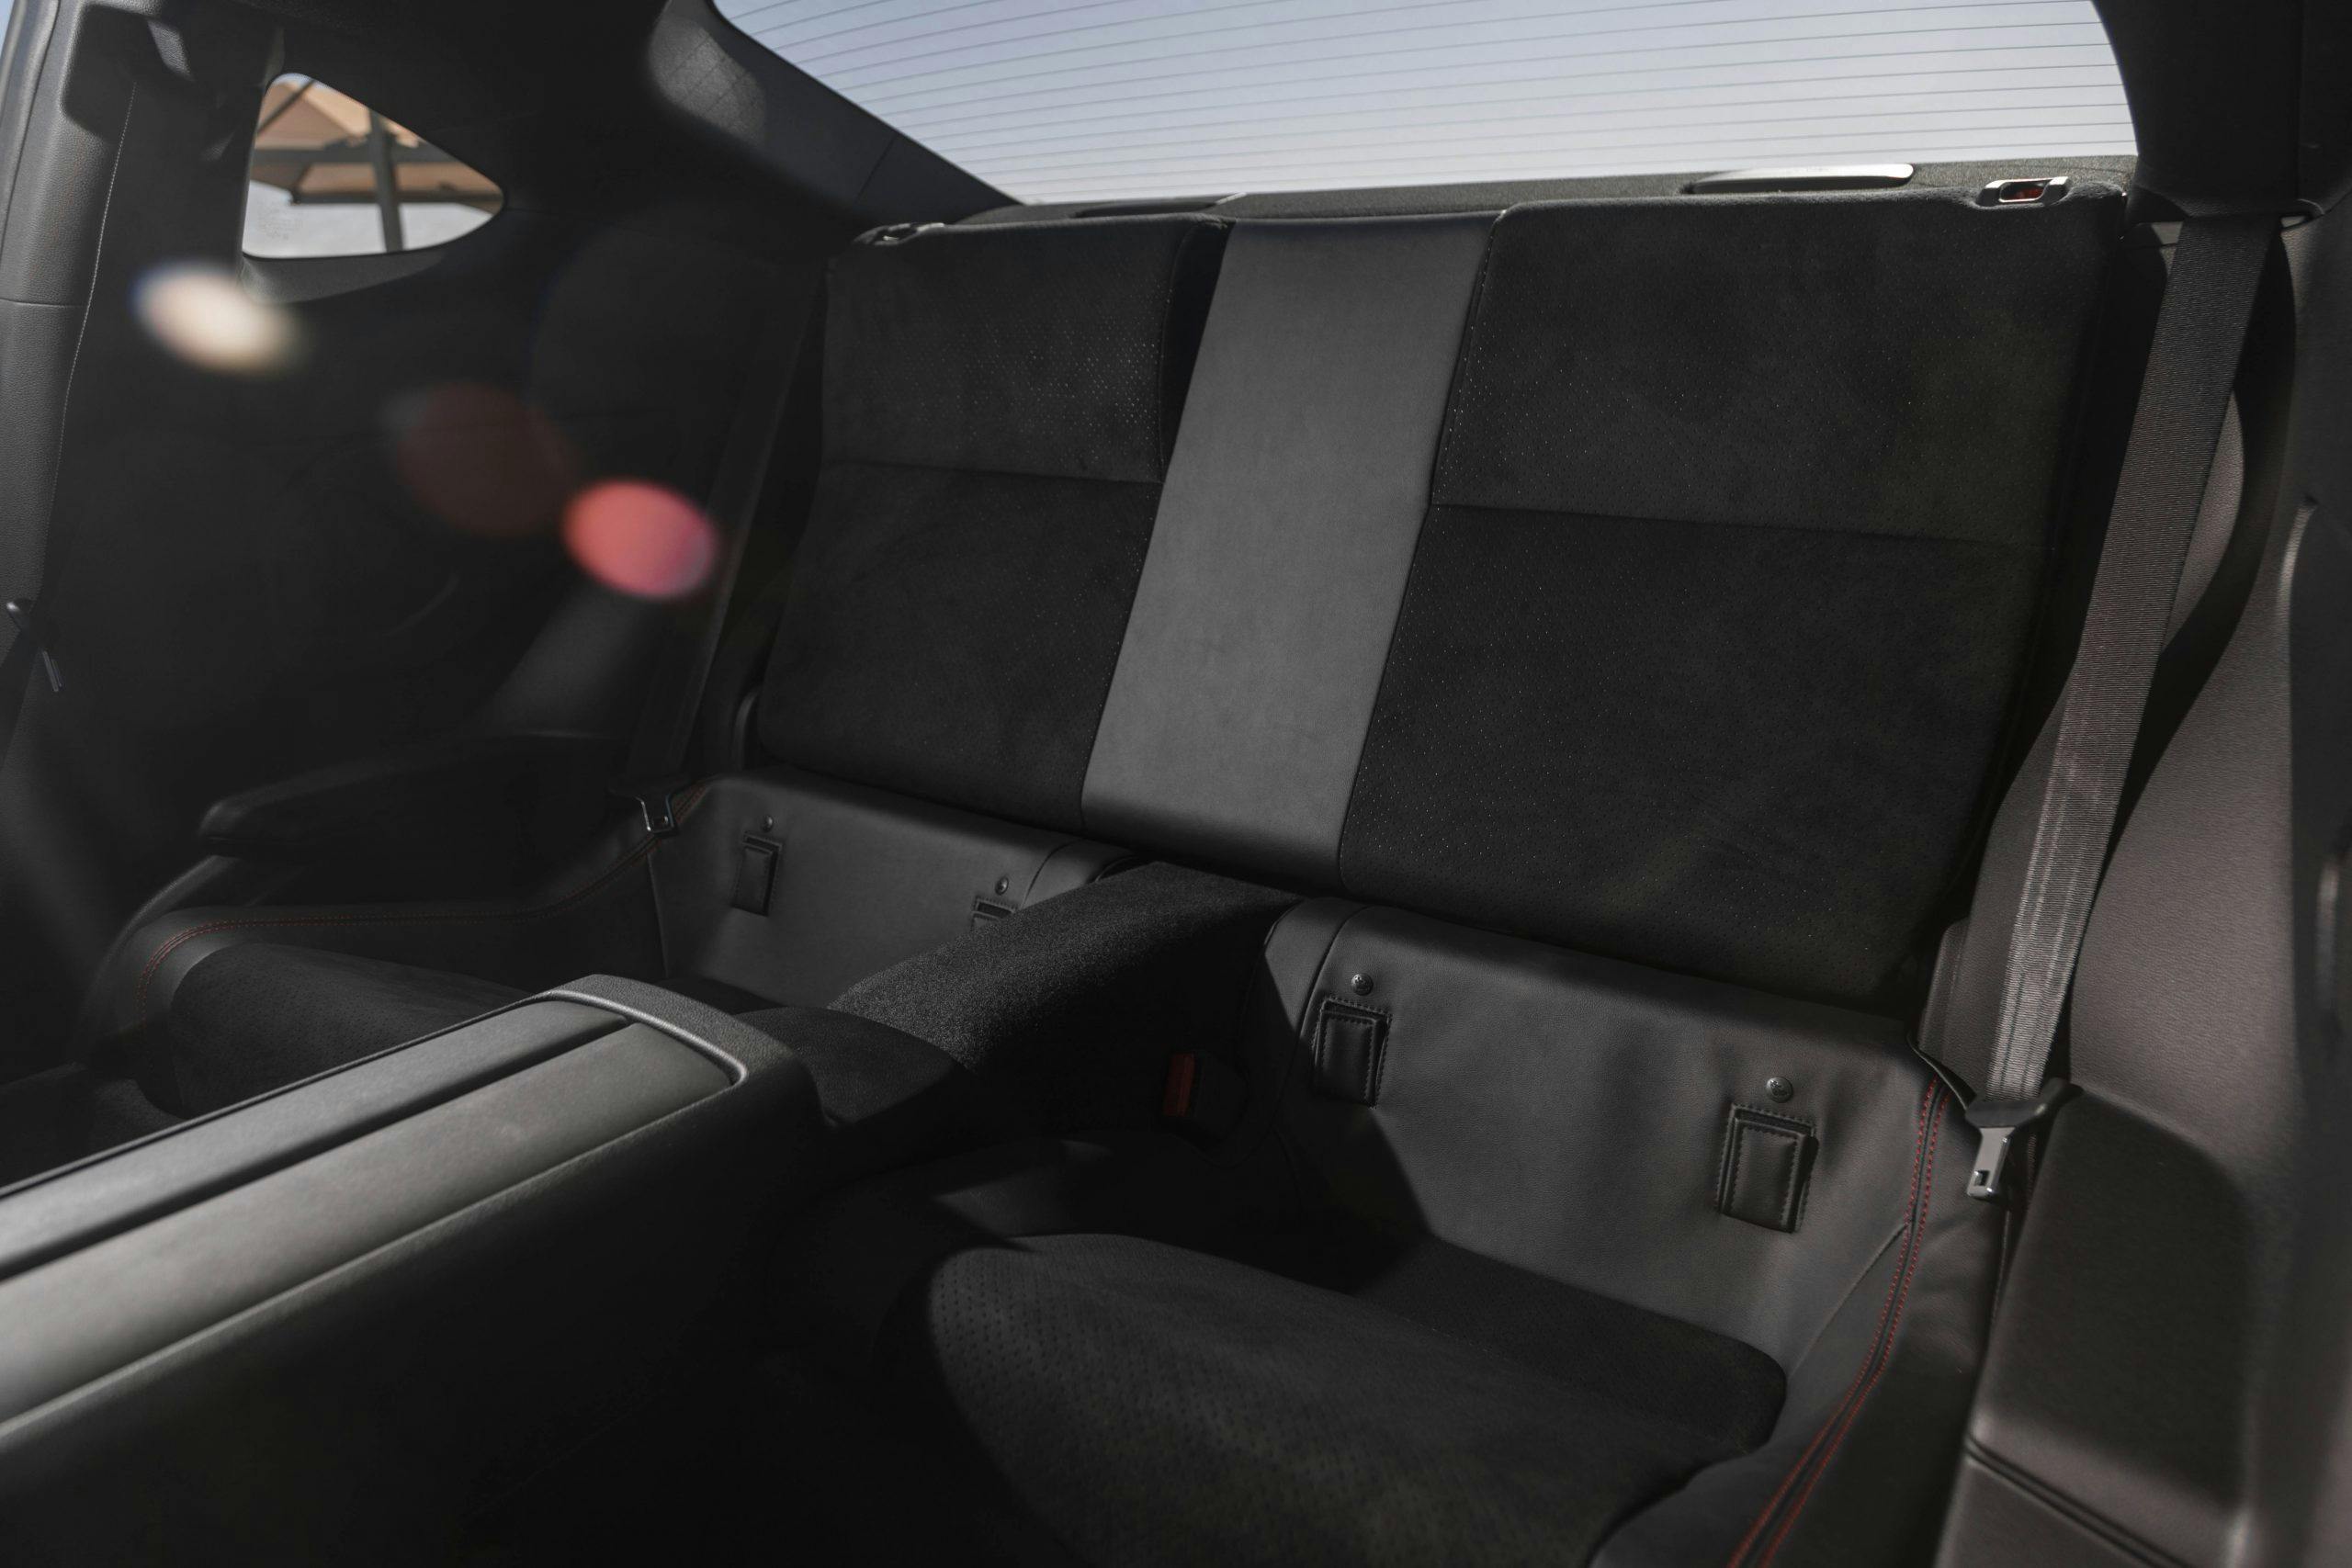 New 2022 Subaru BRZ interior rear seat